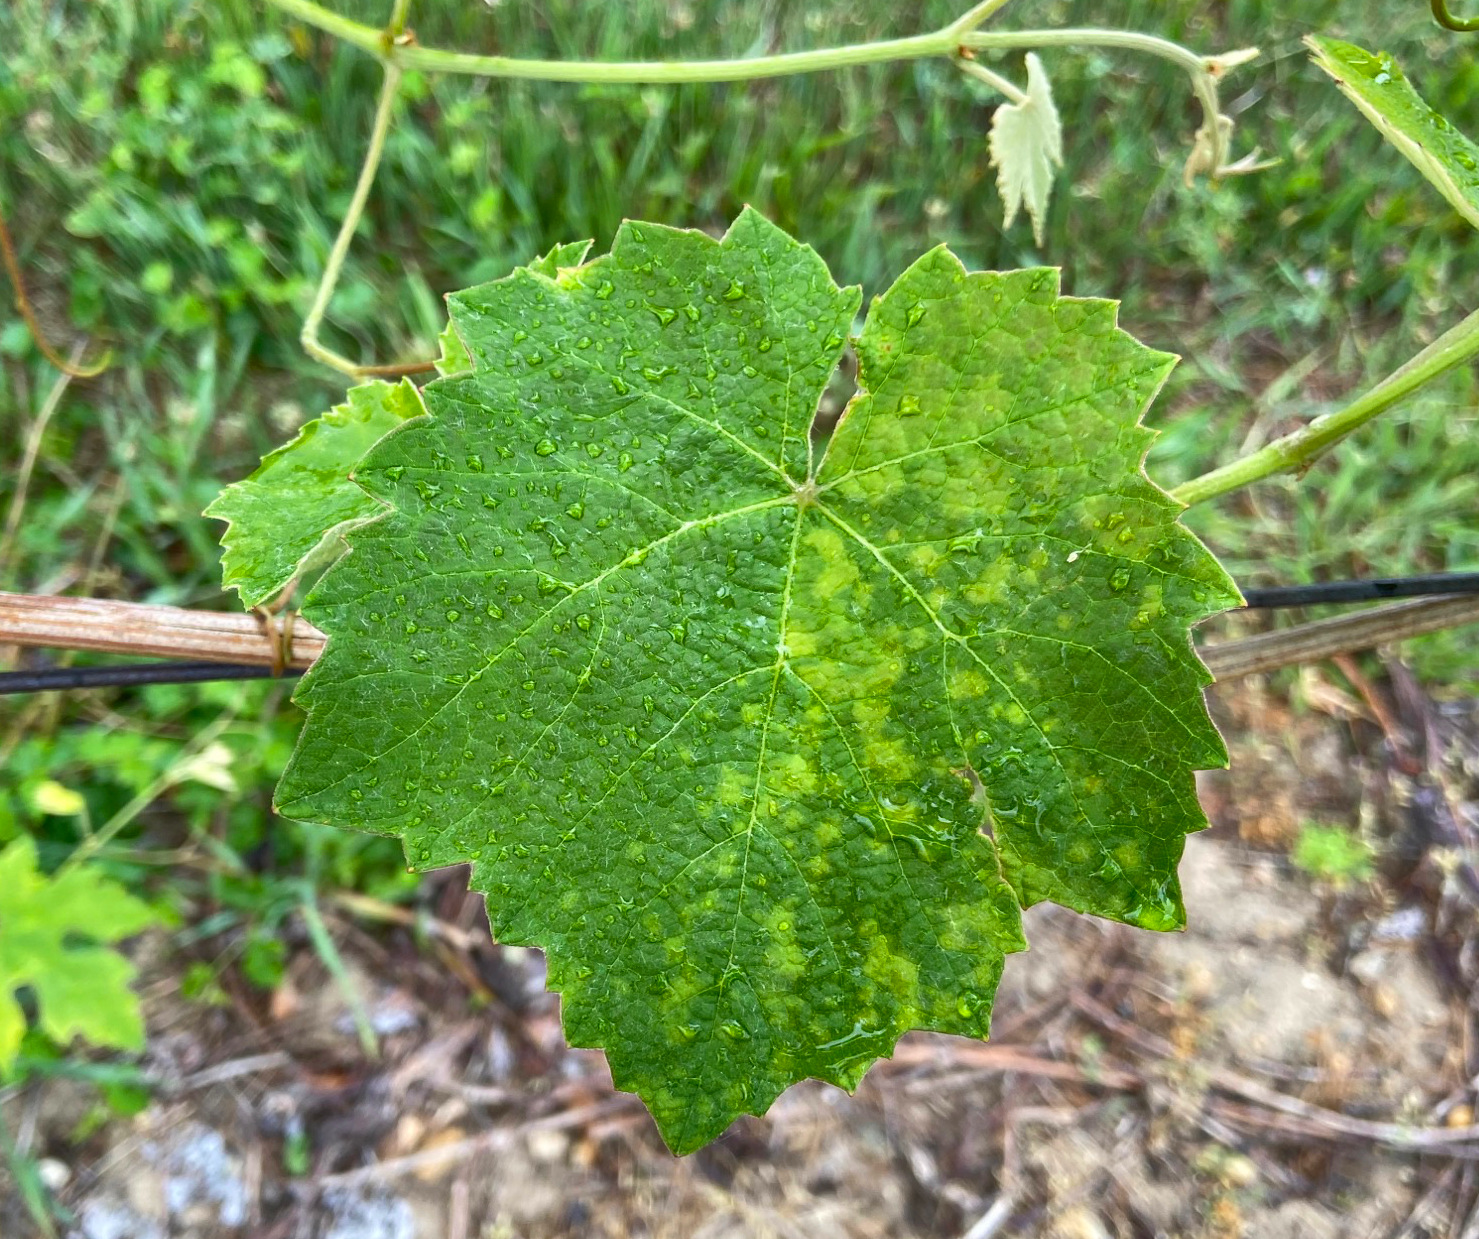 Downy mildew on grape leaf